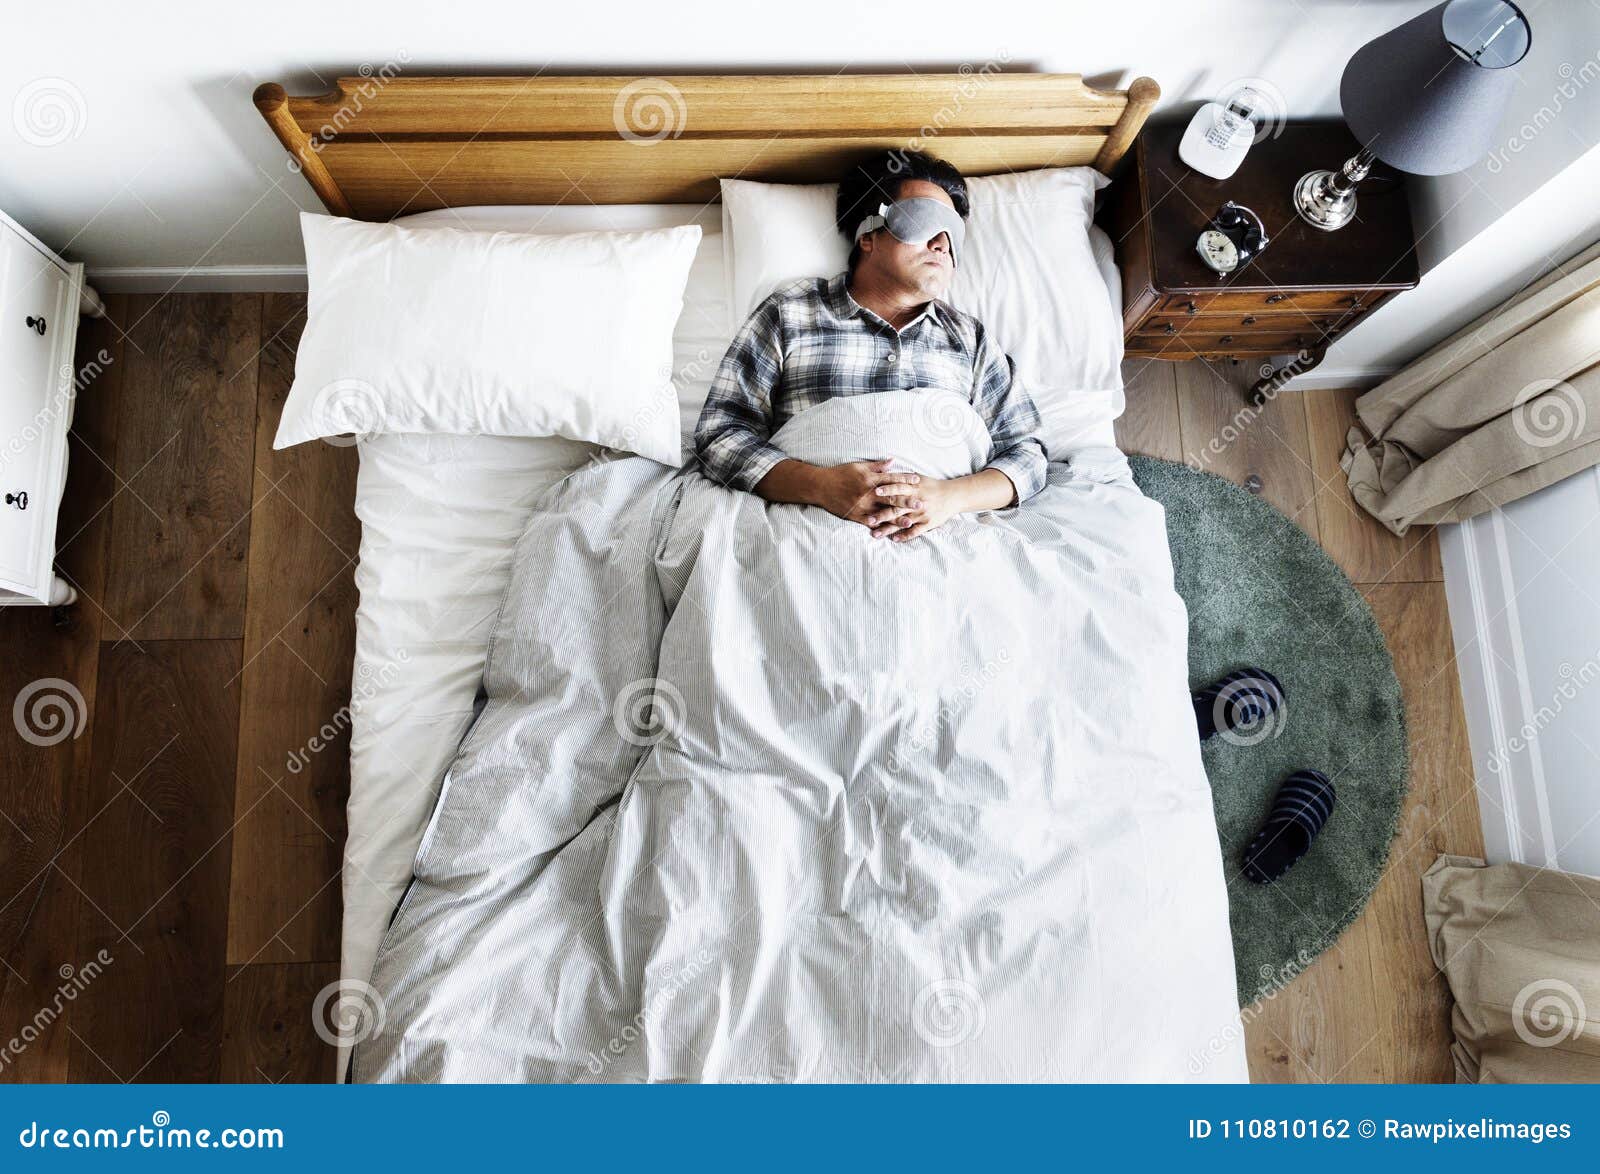 japanese man sleeping on bed with eye mask